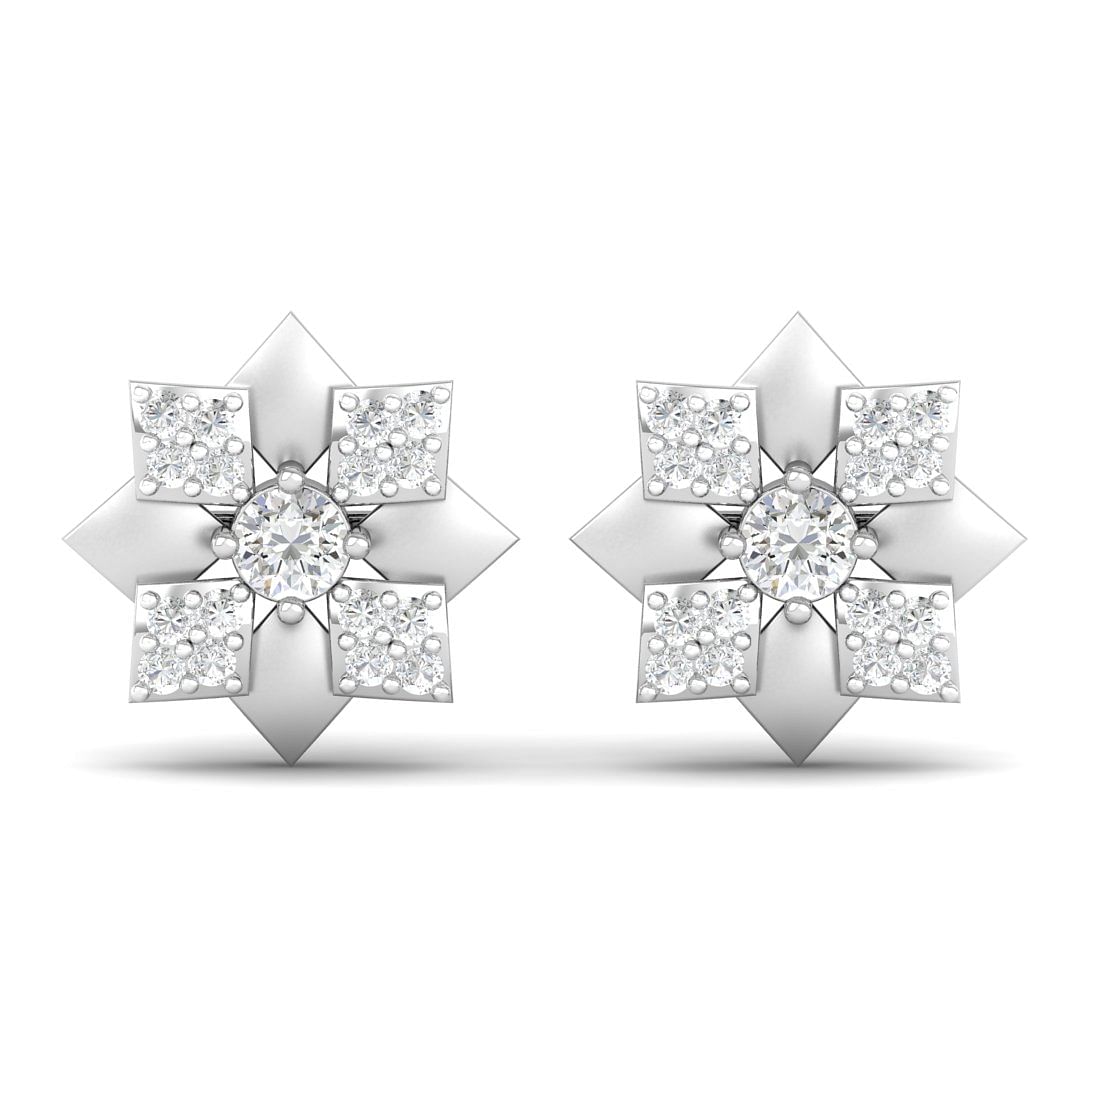 18k White Gold Fuscia Diamond Earrings For Anniversary Gift